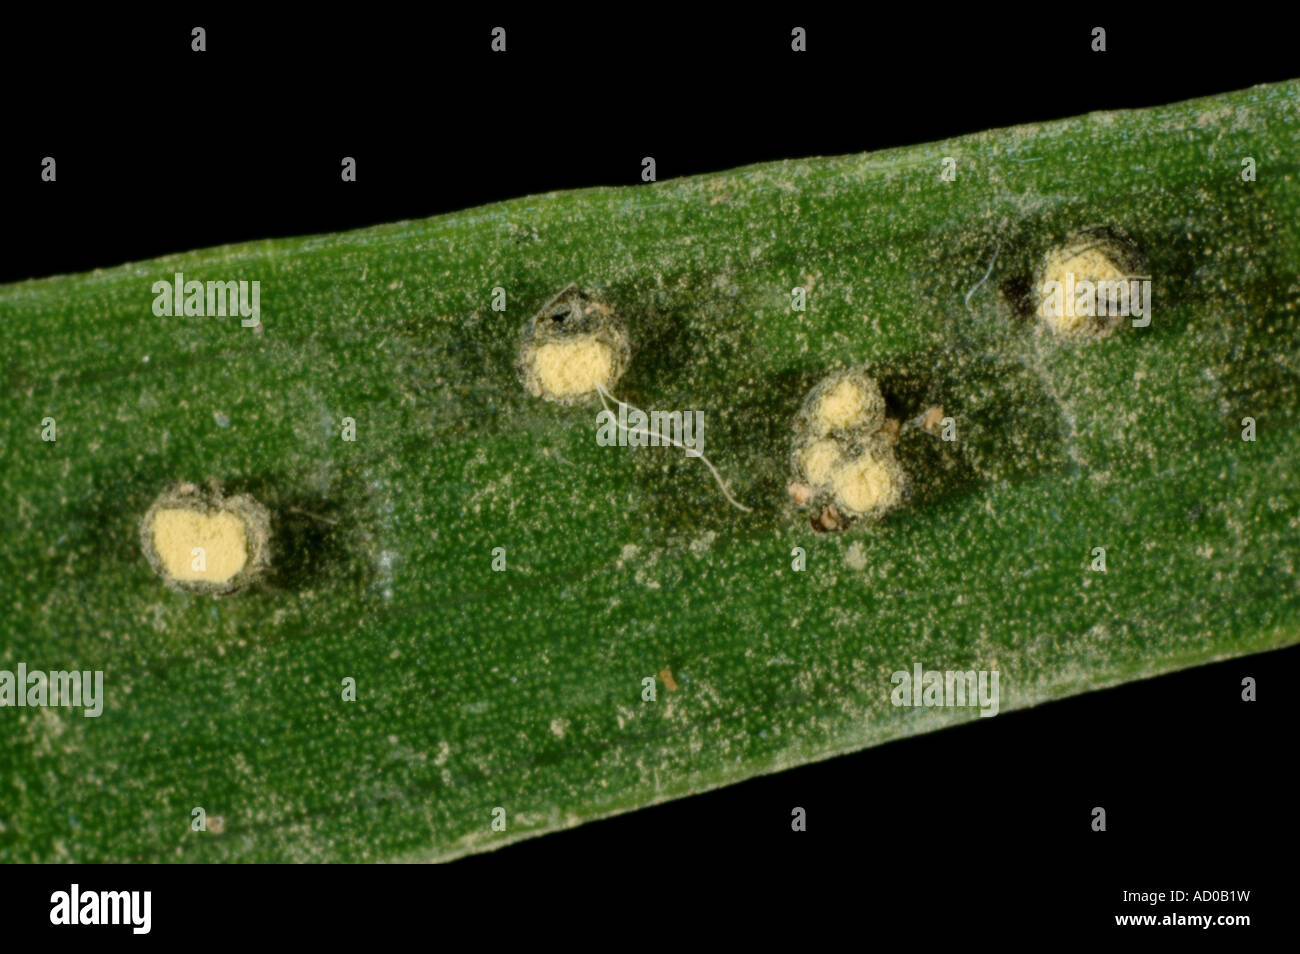 Palm false smut Graphiola phoenicis pustules before sporulation on palm leaf surface Stock Photo